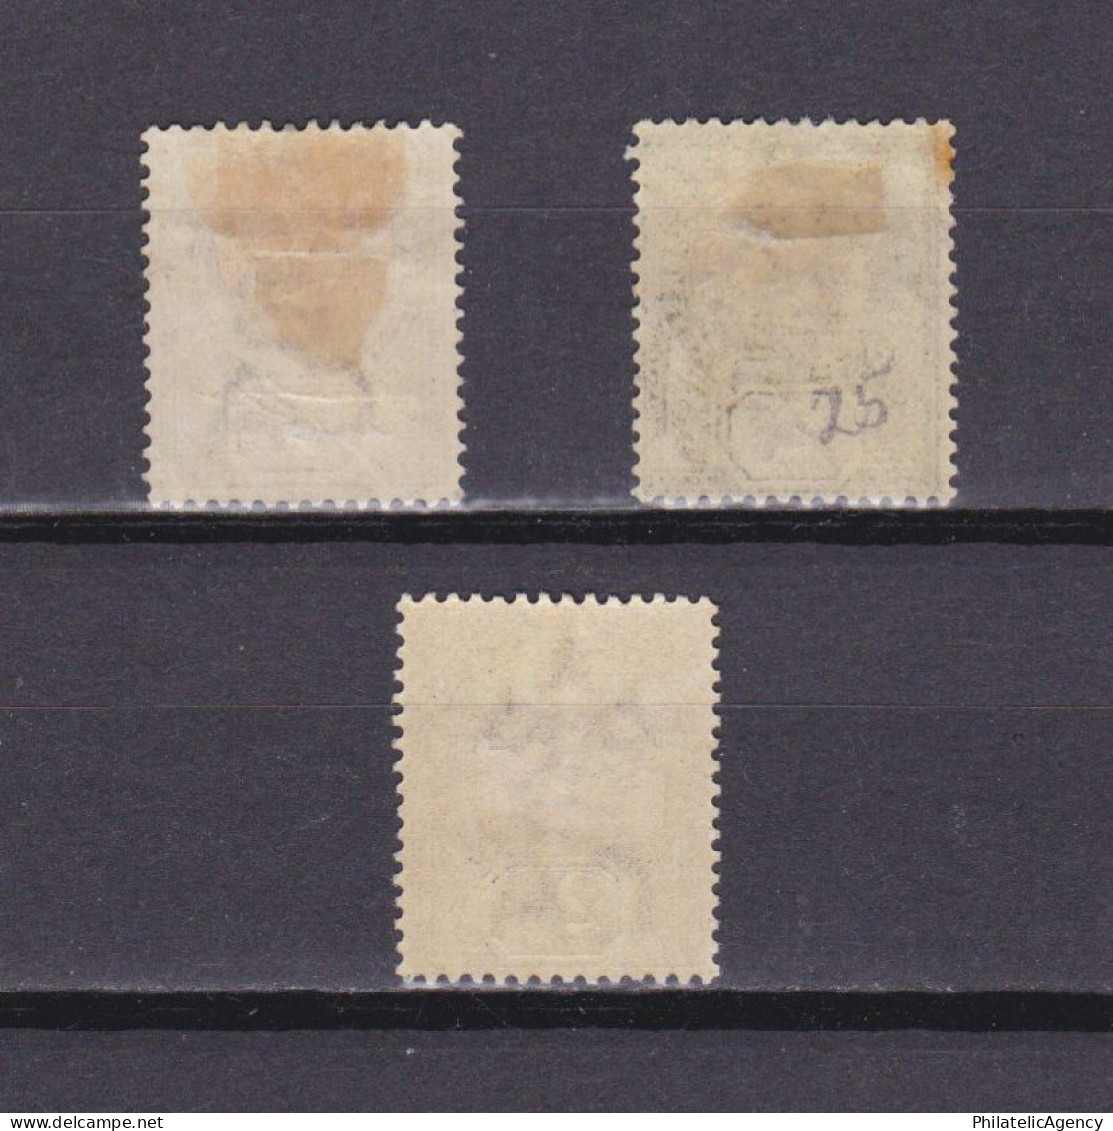 JAMAICA 1889, SG #27-29, CV £45, MH - Jamaica (...-1961)